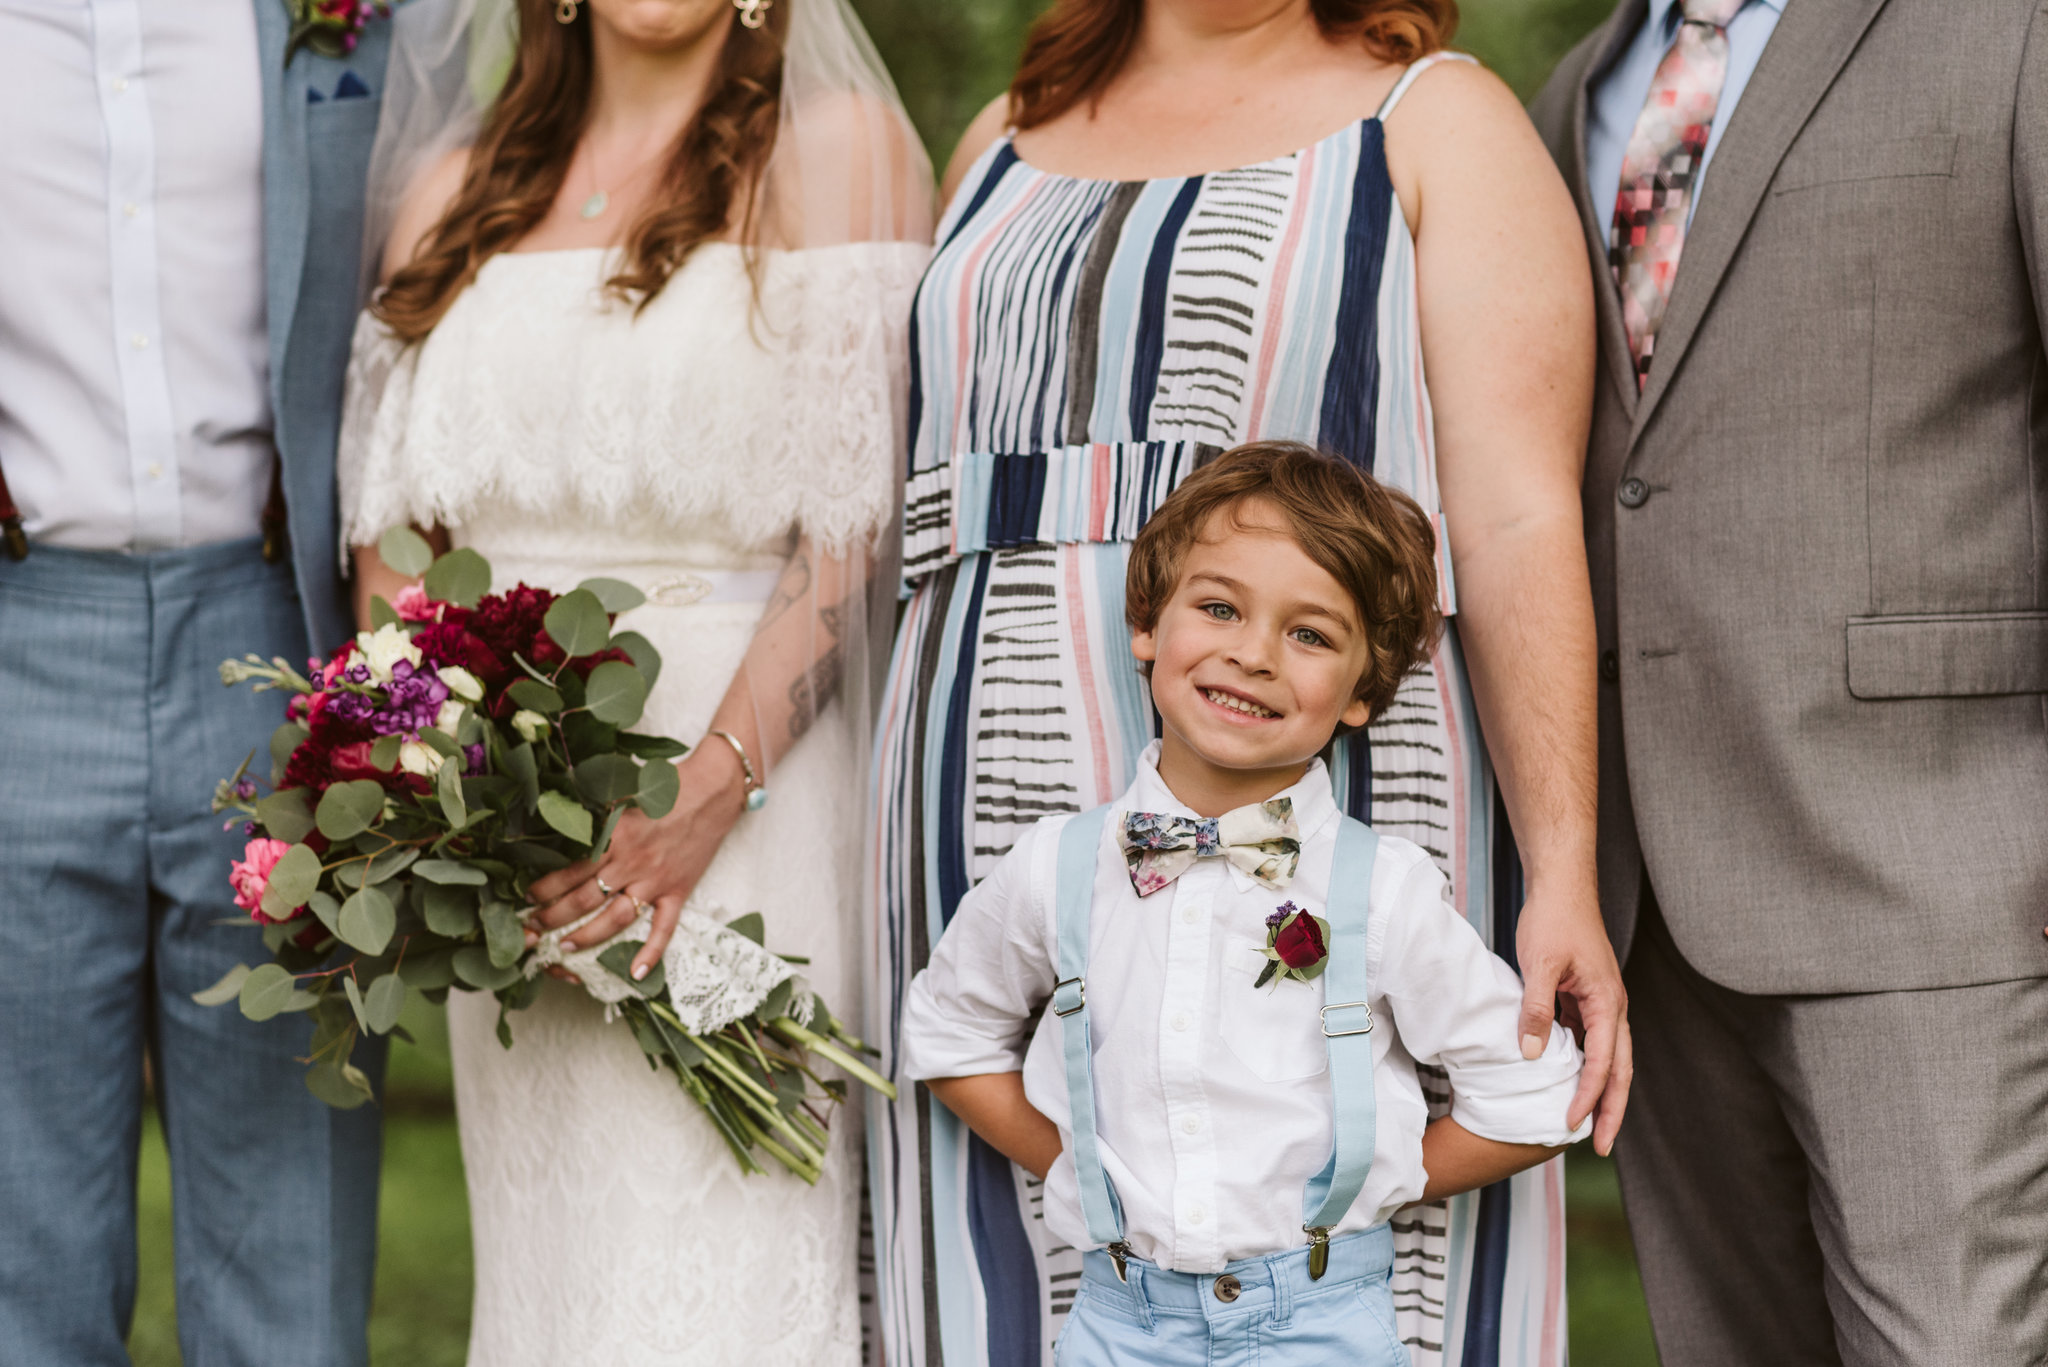  Annapolis, Quaker Wedding, Maryland Wedding Photographer, Intimate, Small Wedding, Vintage, DIY, Ring Bearer, Blue Suspenders, Cute Photo of Boy at Wedding 